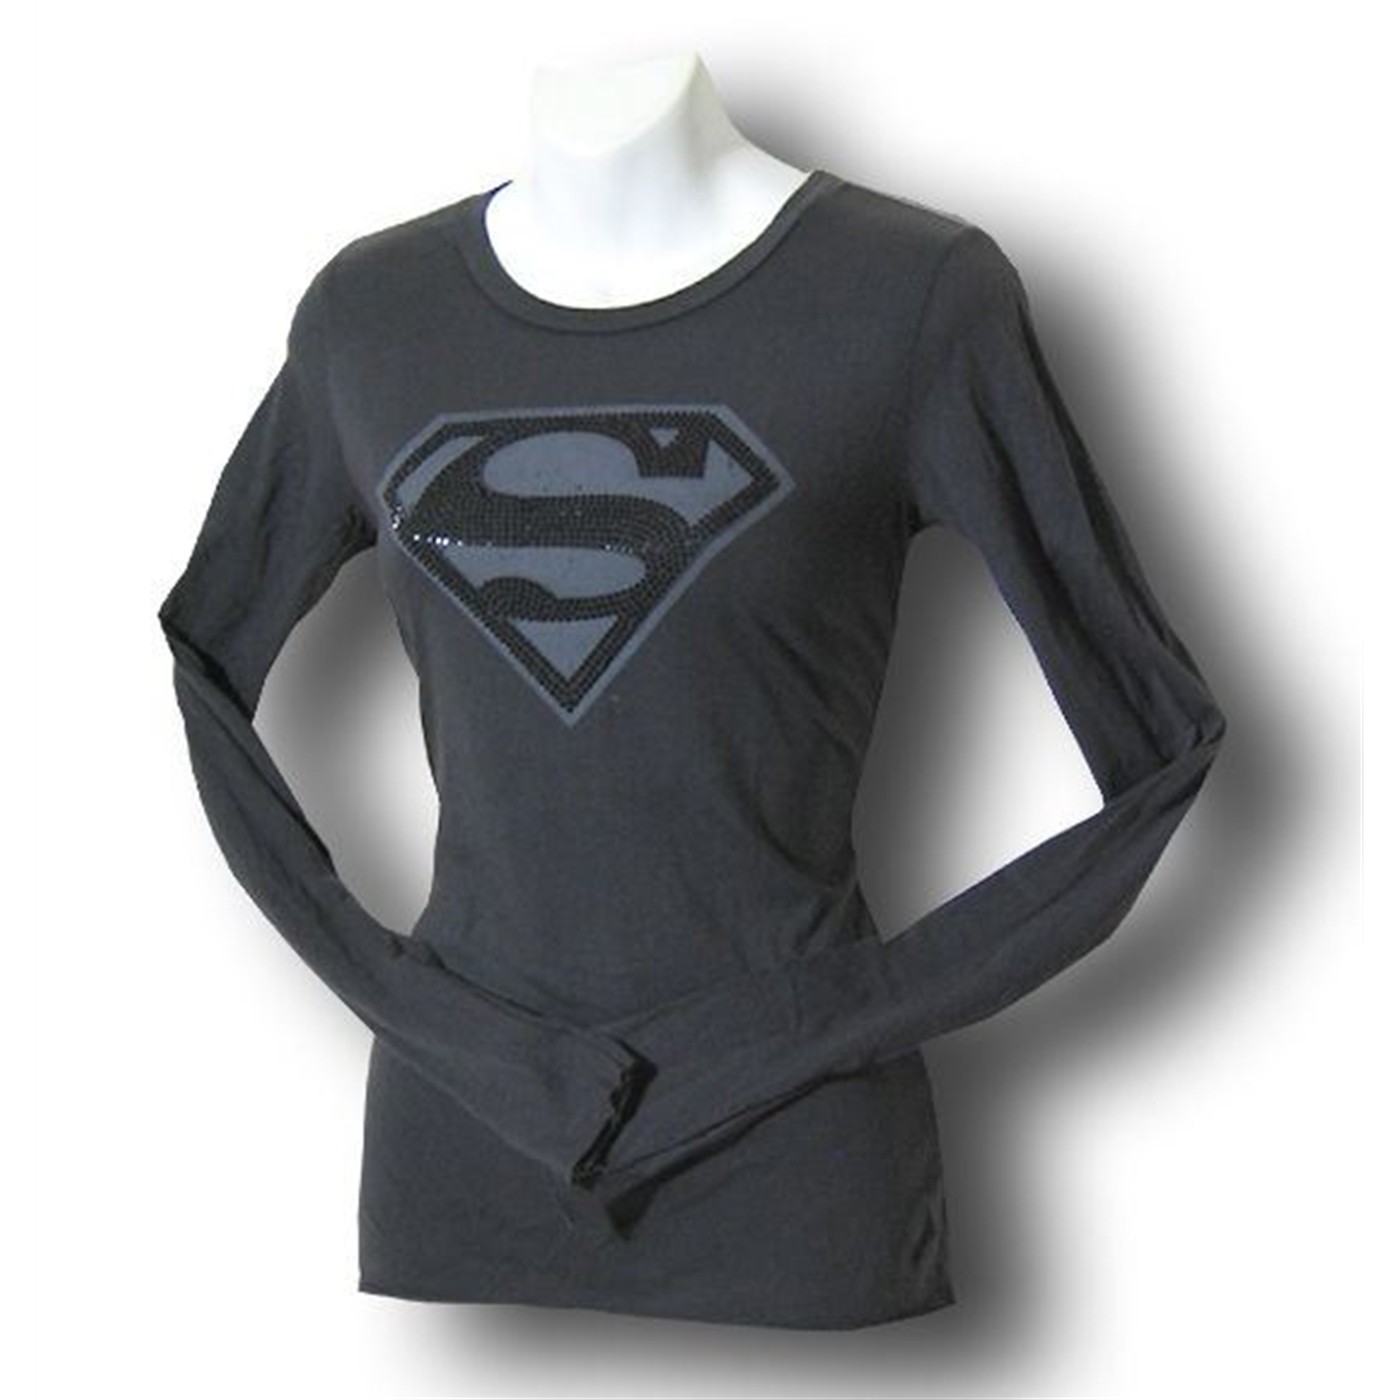 Supergirl Swarovski Crystal T-Shirt Long Sleeve